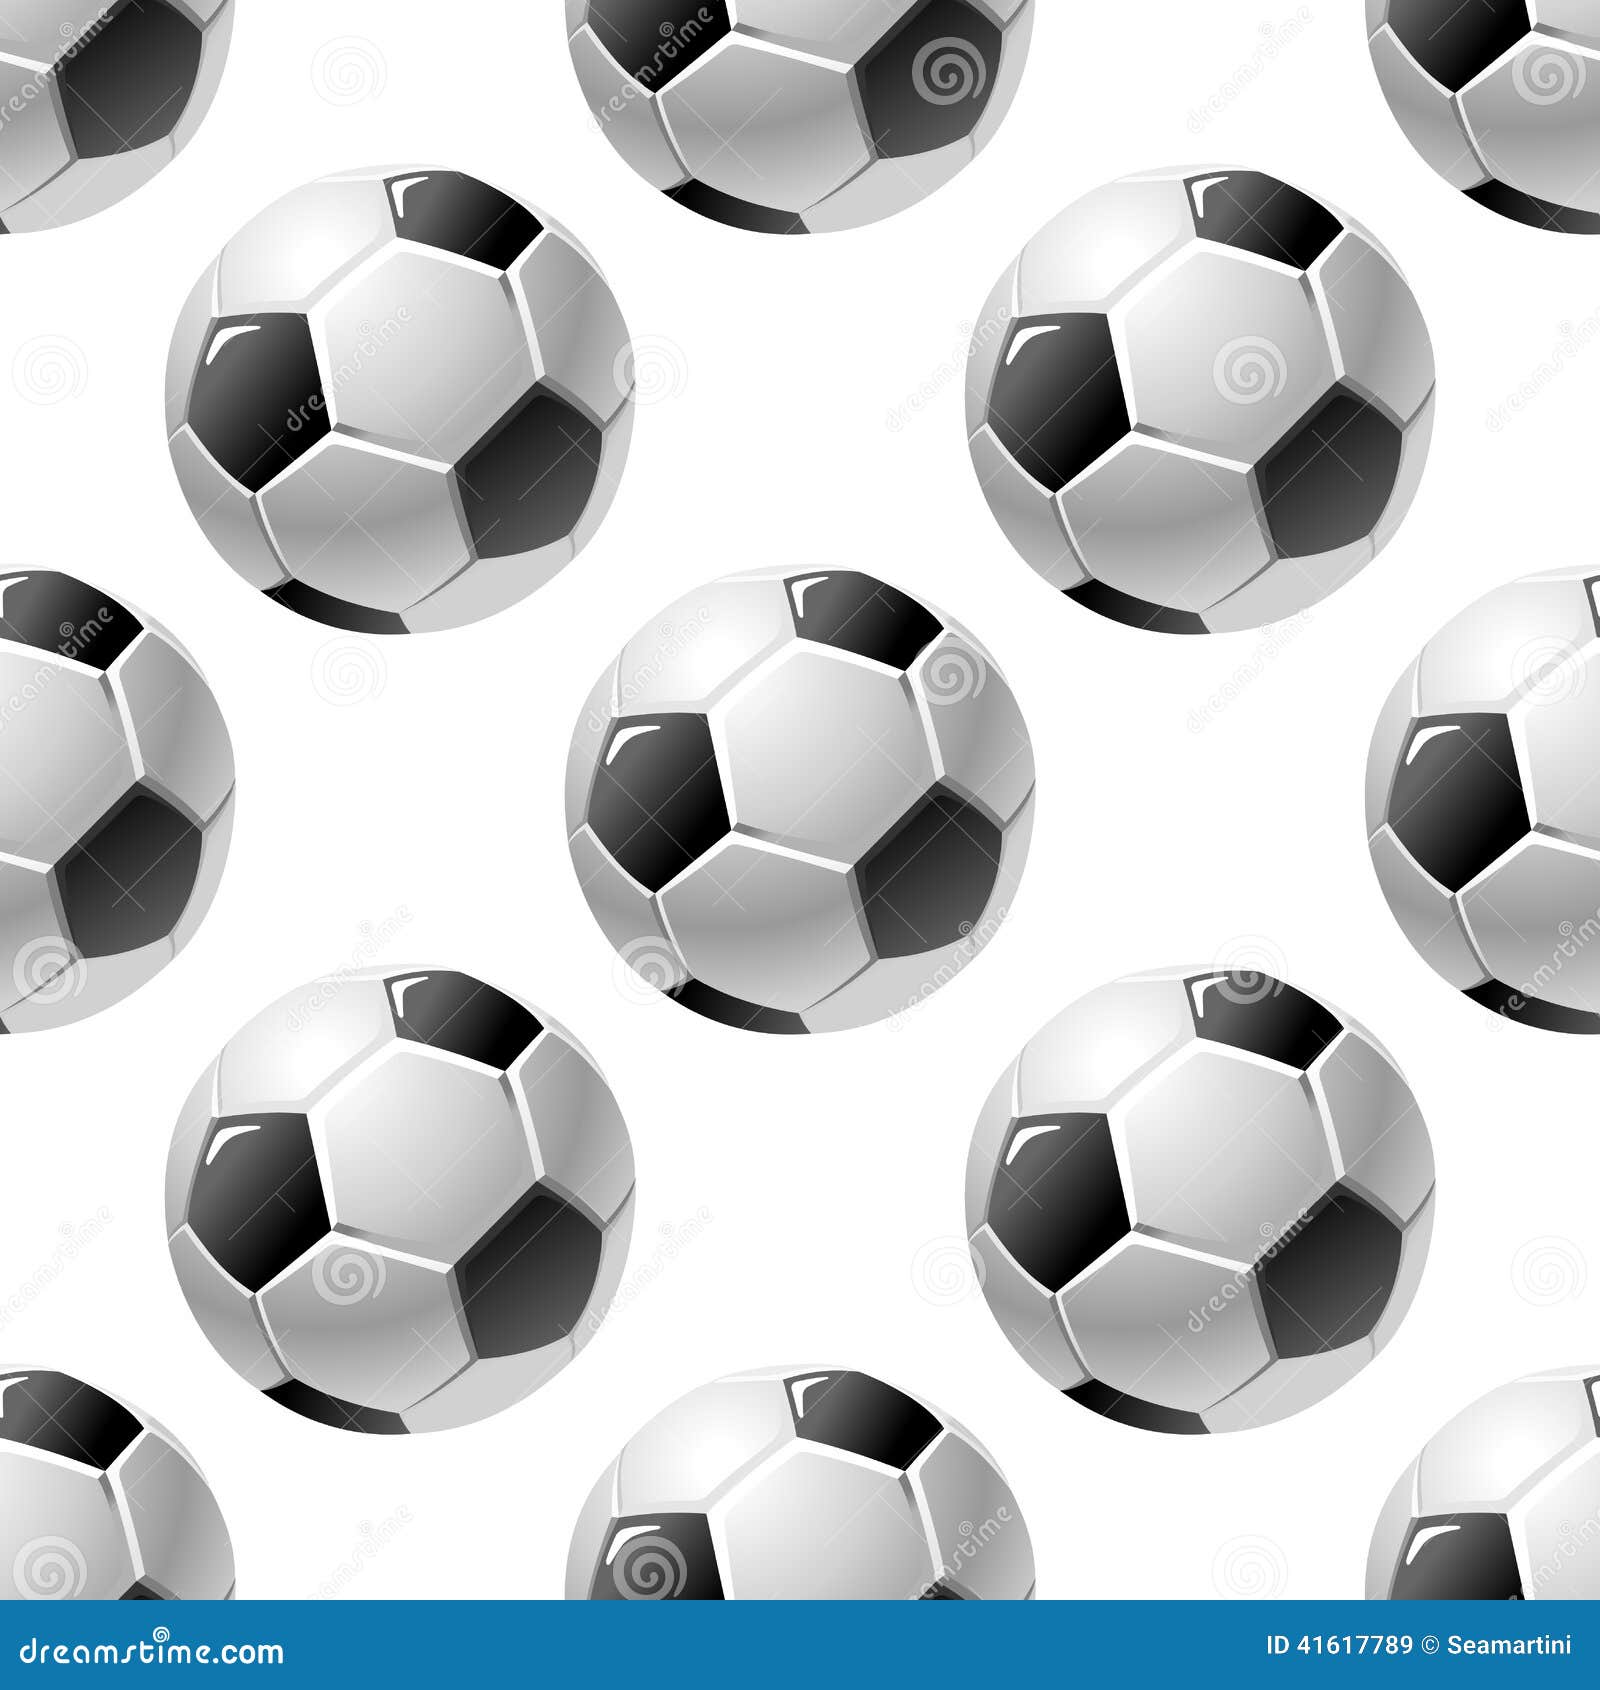 Football or Soccer Ball Seamless Pattern Stock Vector - Illustration of ...